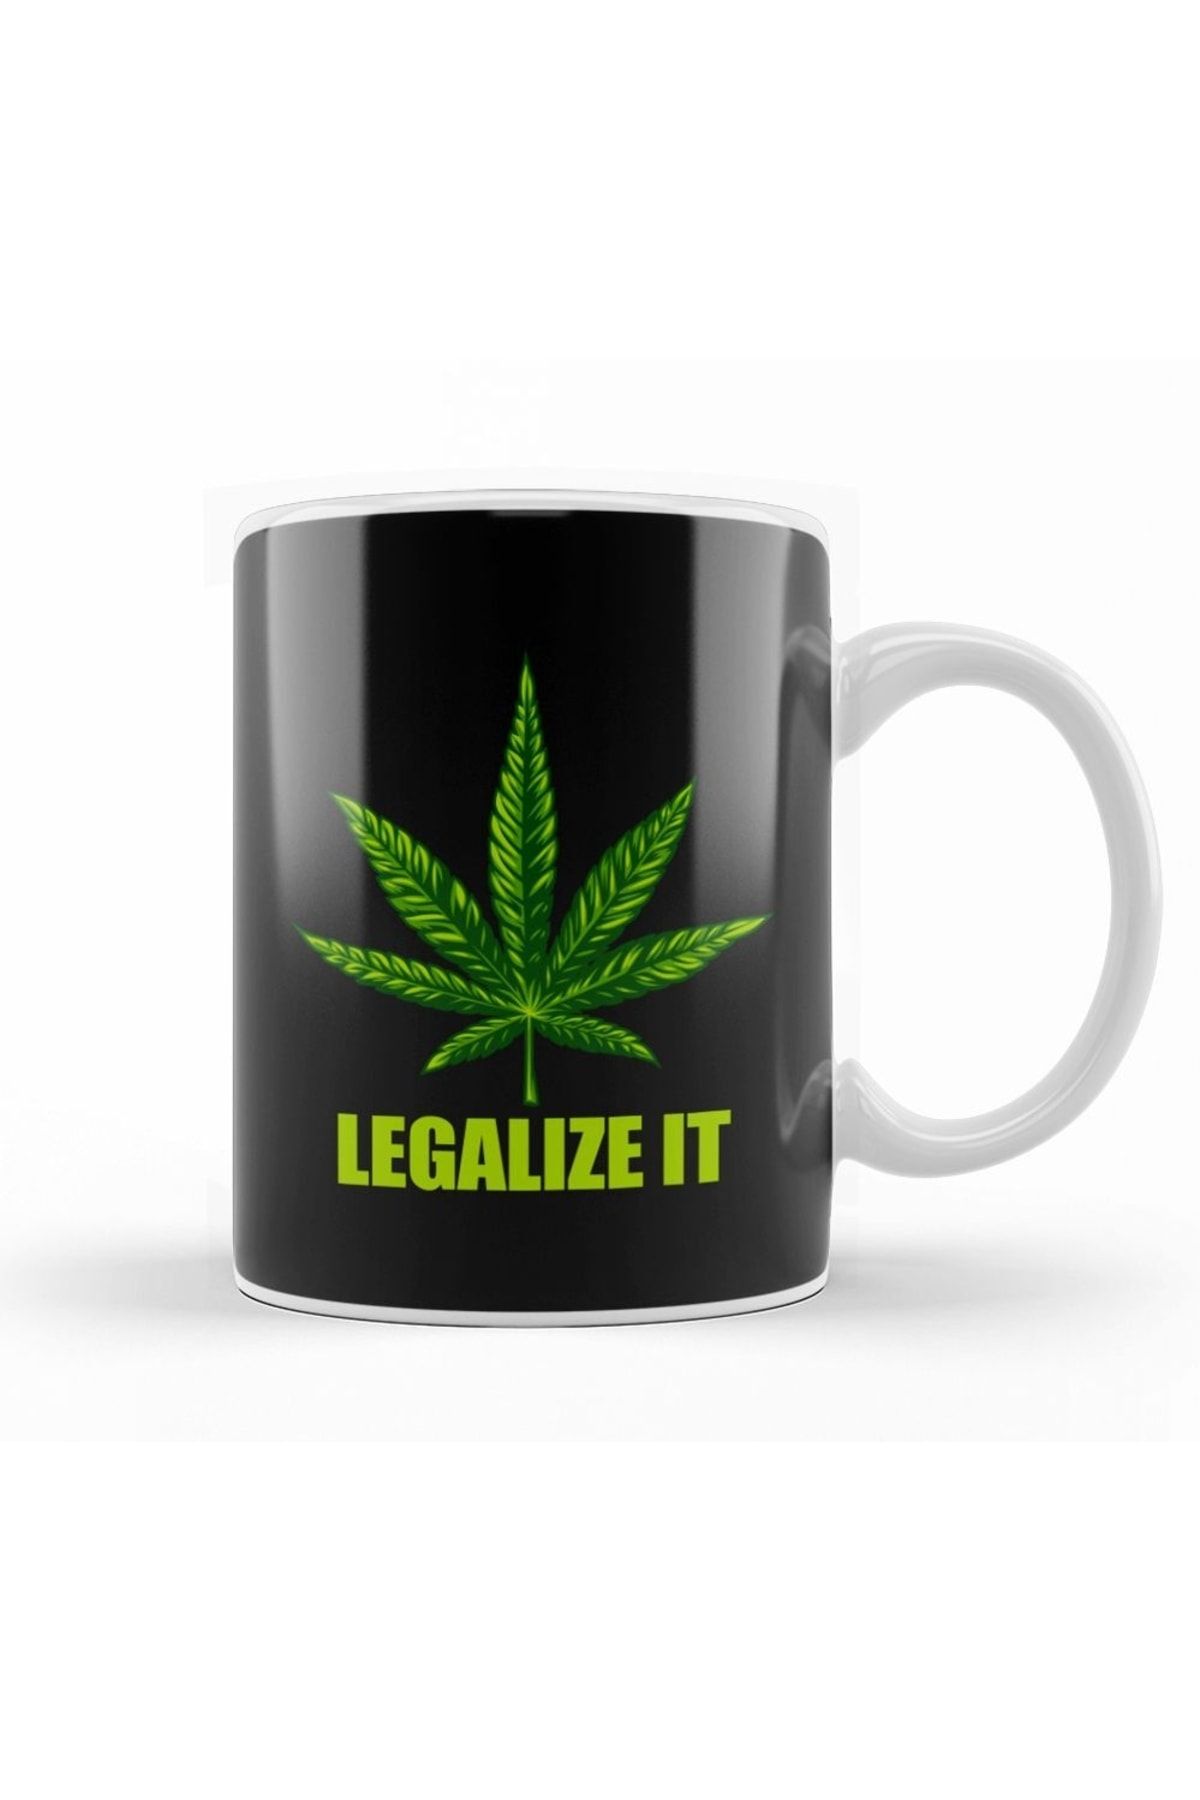 Humuts Weed Legalize It Marijuana Cannabis Kupa Bardak Porselen